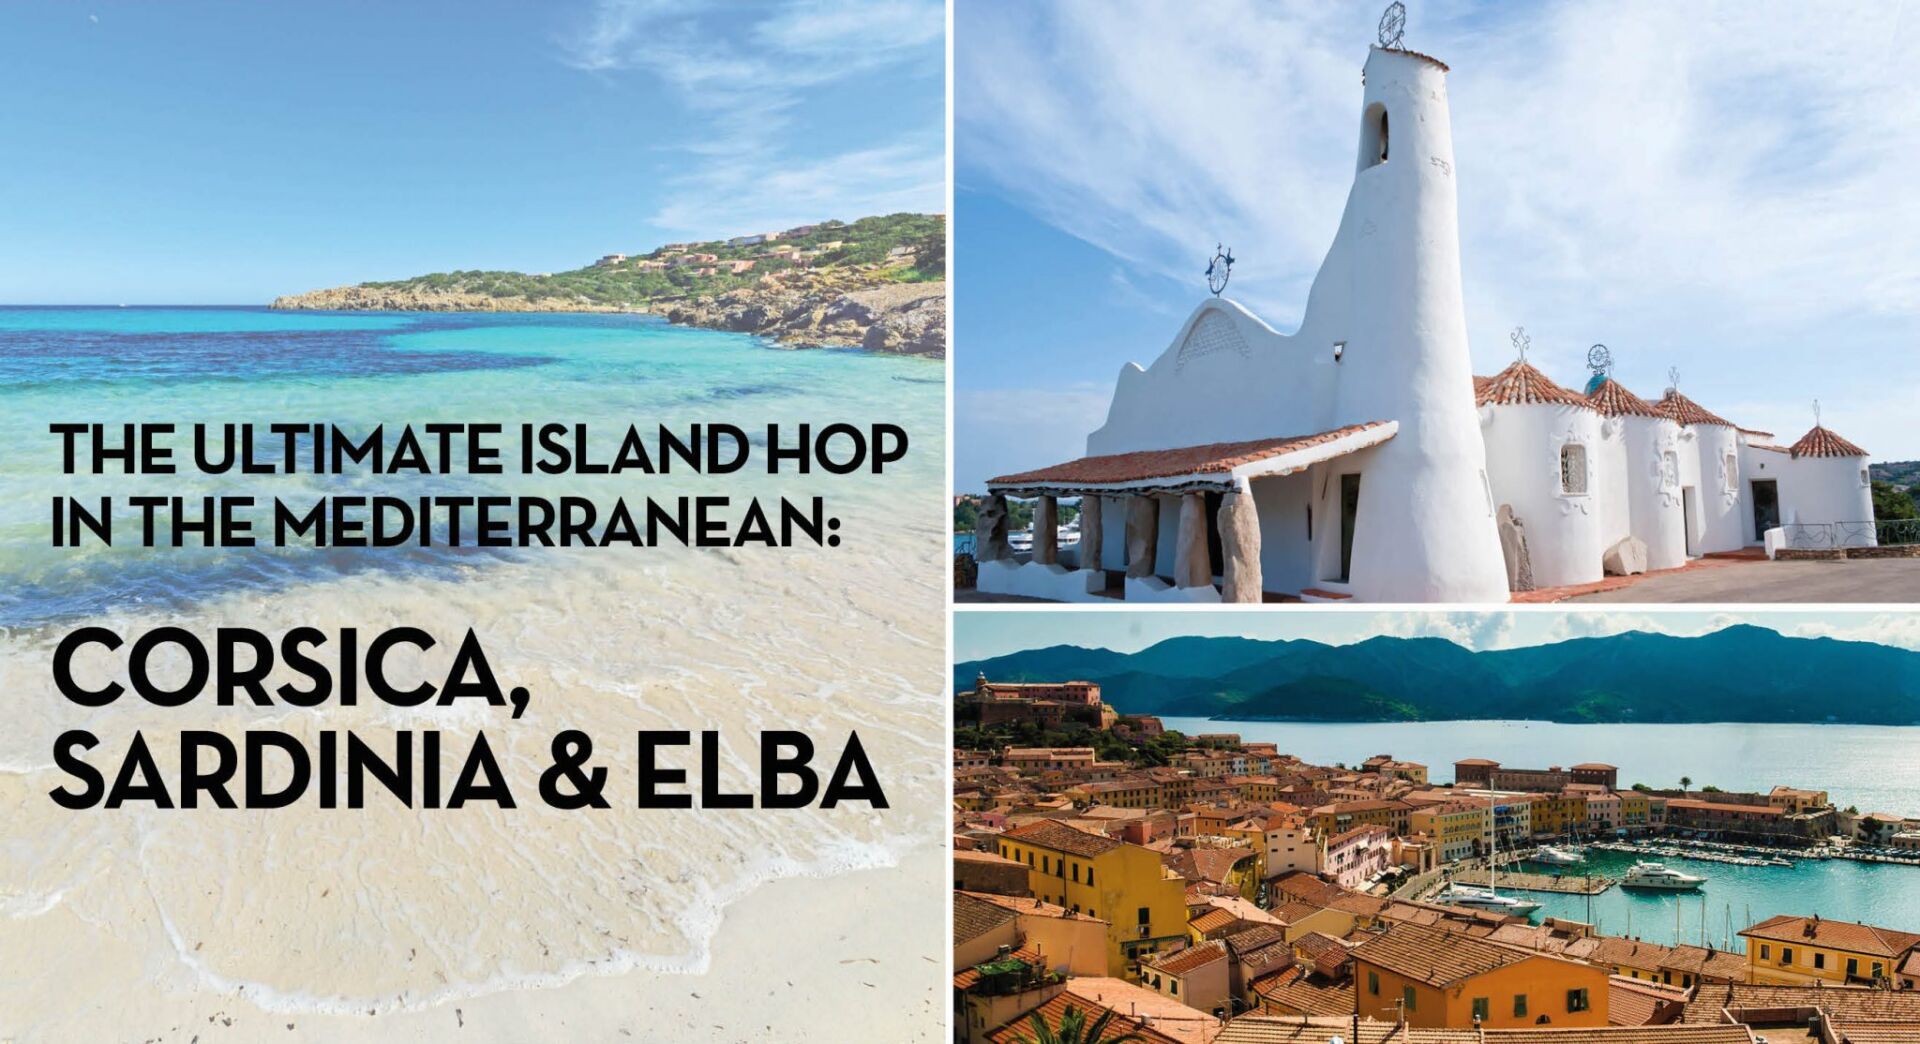 The Ultimate Island Hop: Corisca, Sardinia & Elba